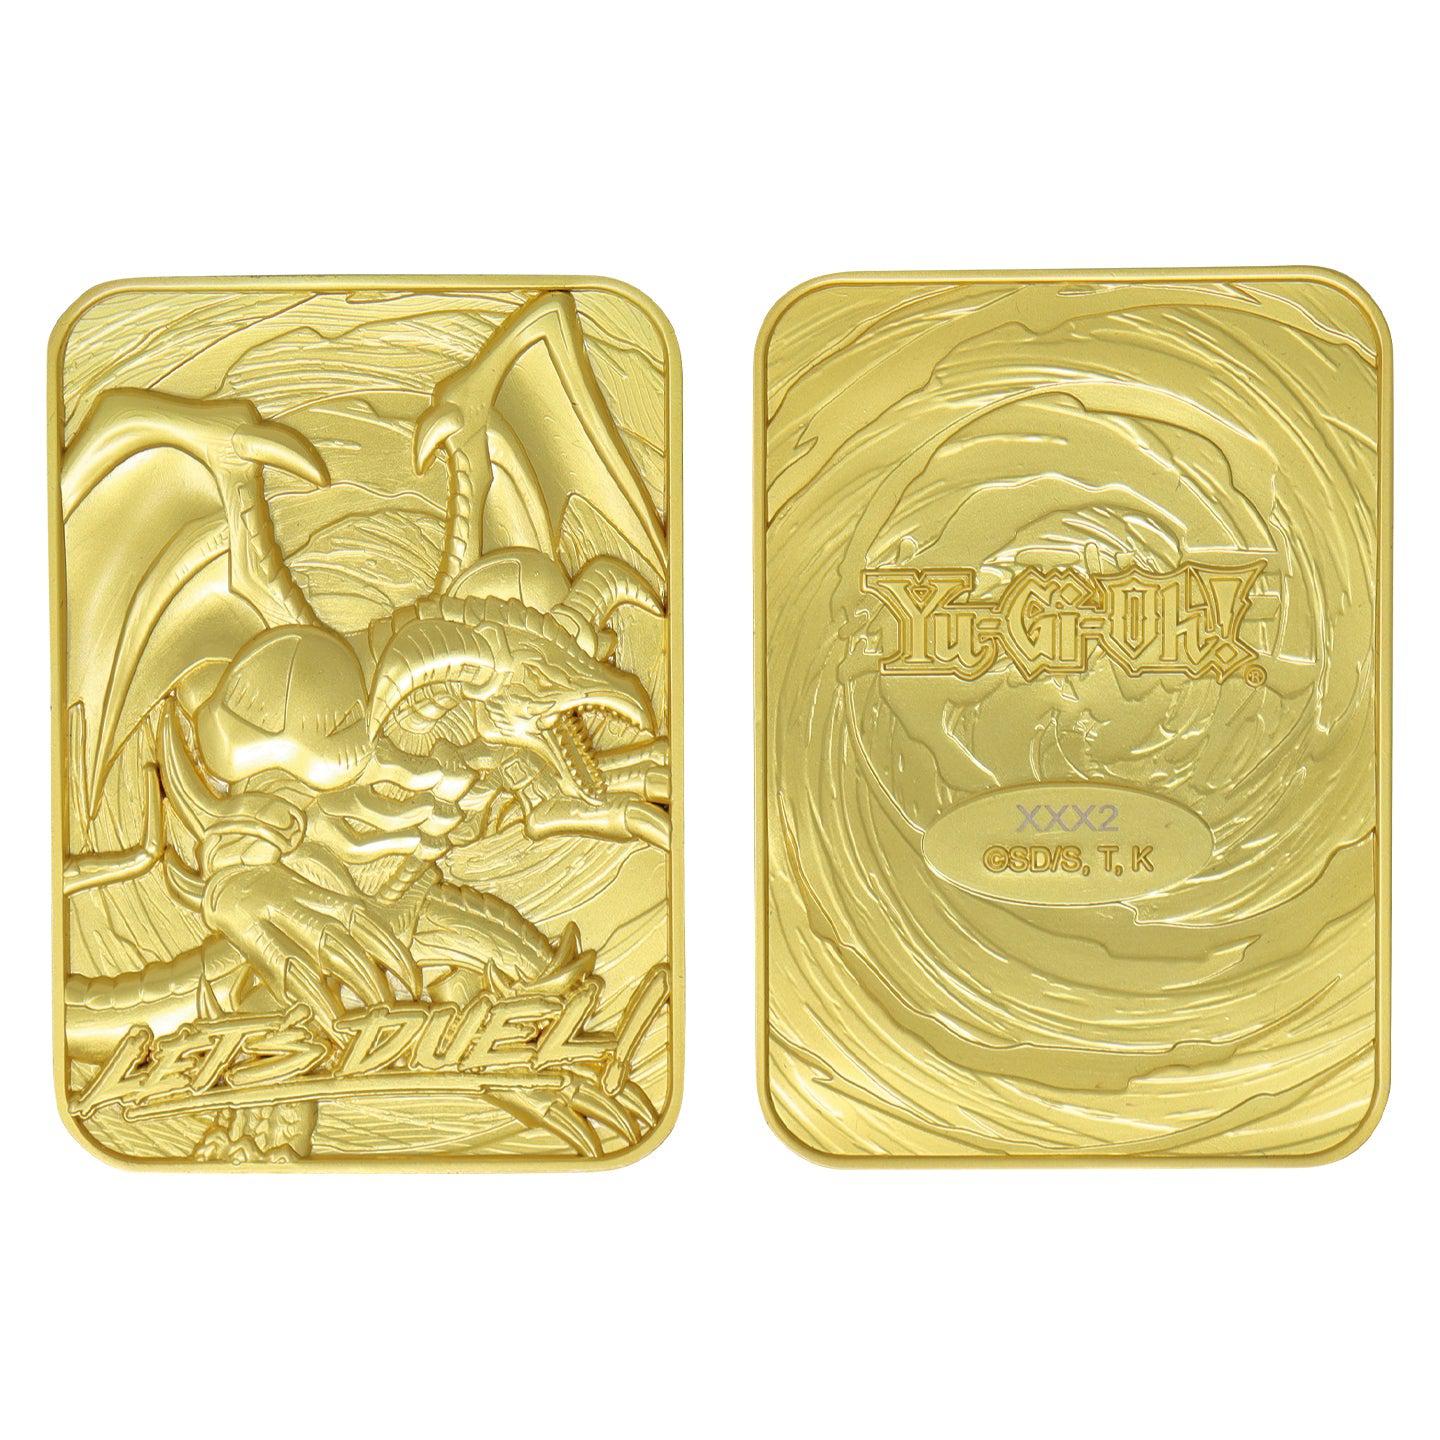 Yu-Gi-Oh! Limited Edition 24k Gold Plated B. Skull Dragon Metal Card